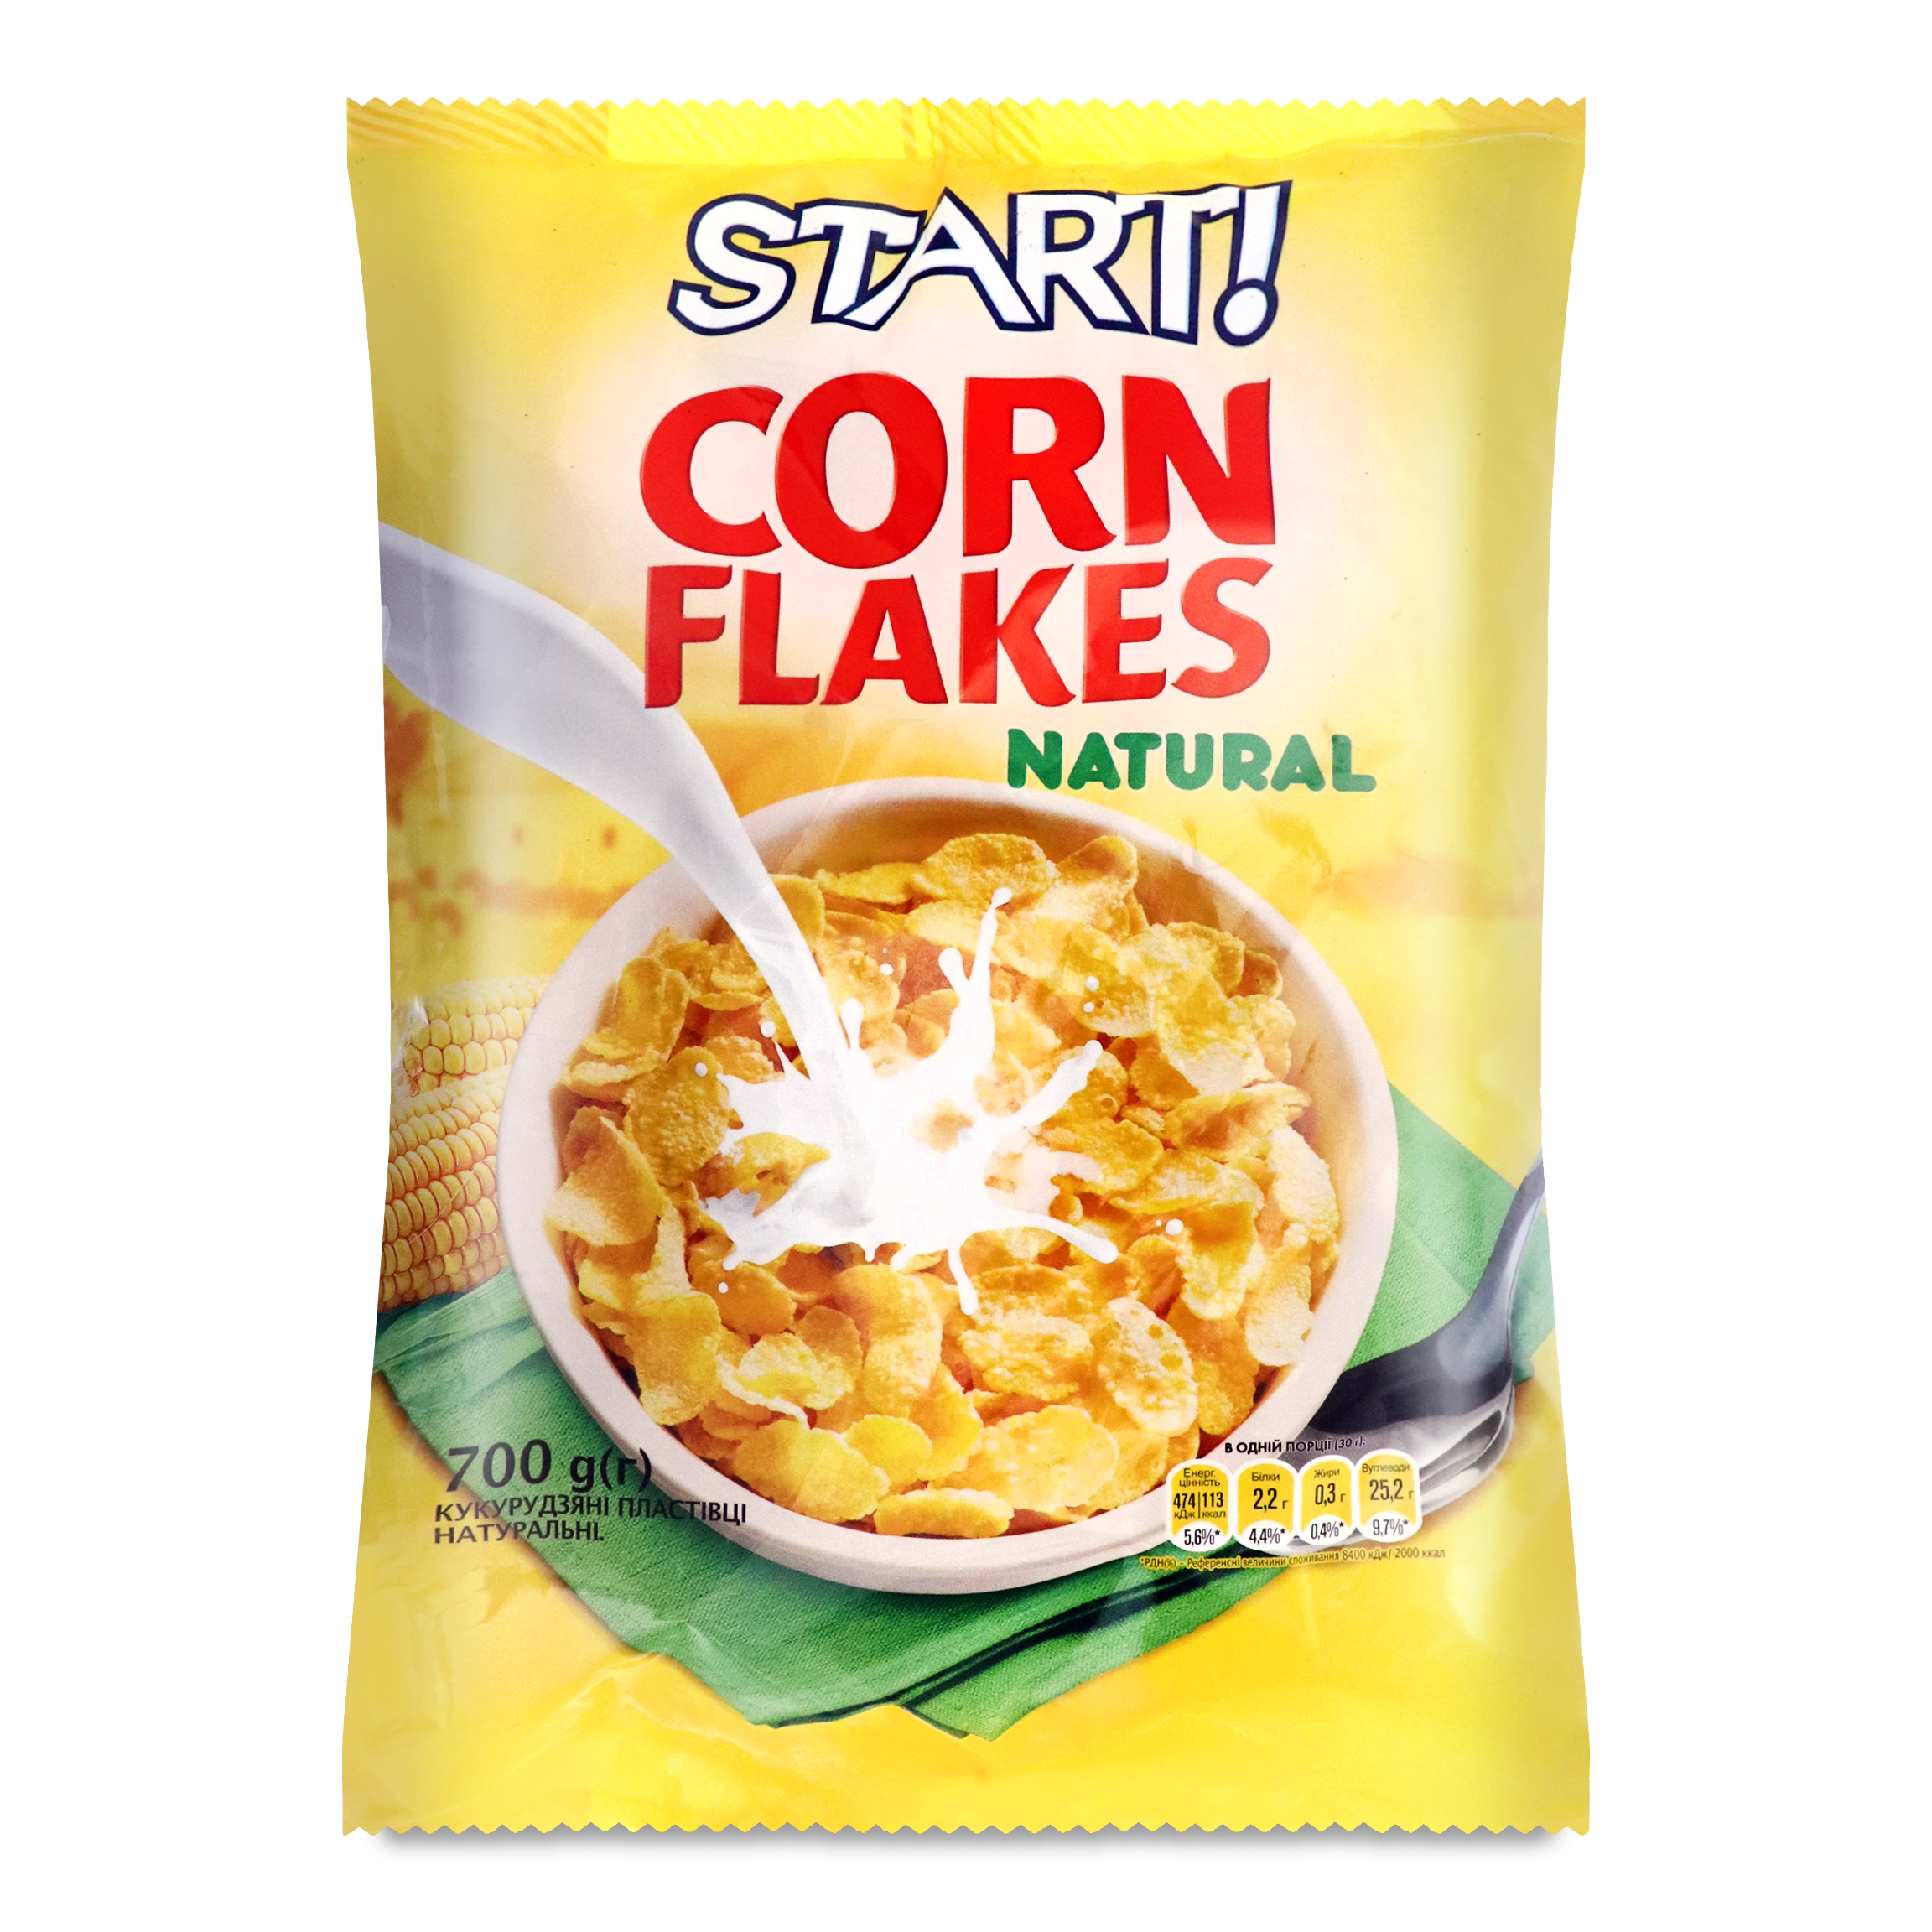 Start! Corn Flakes Natural 700g